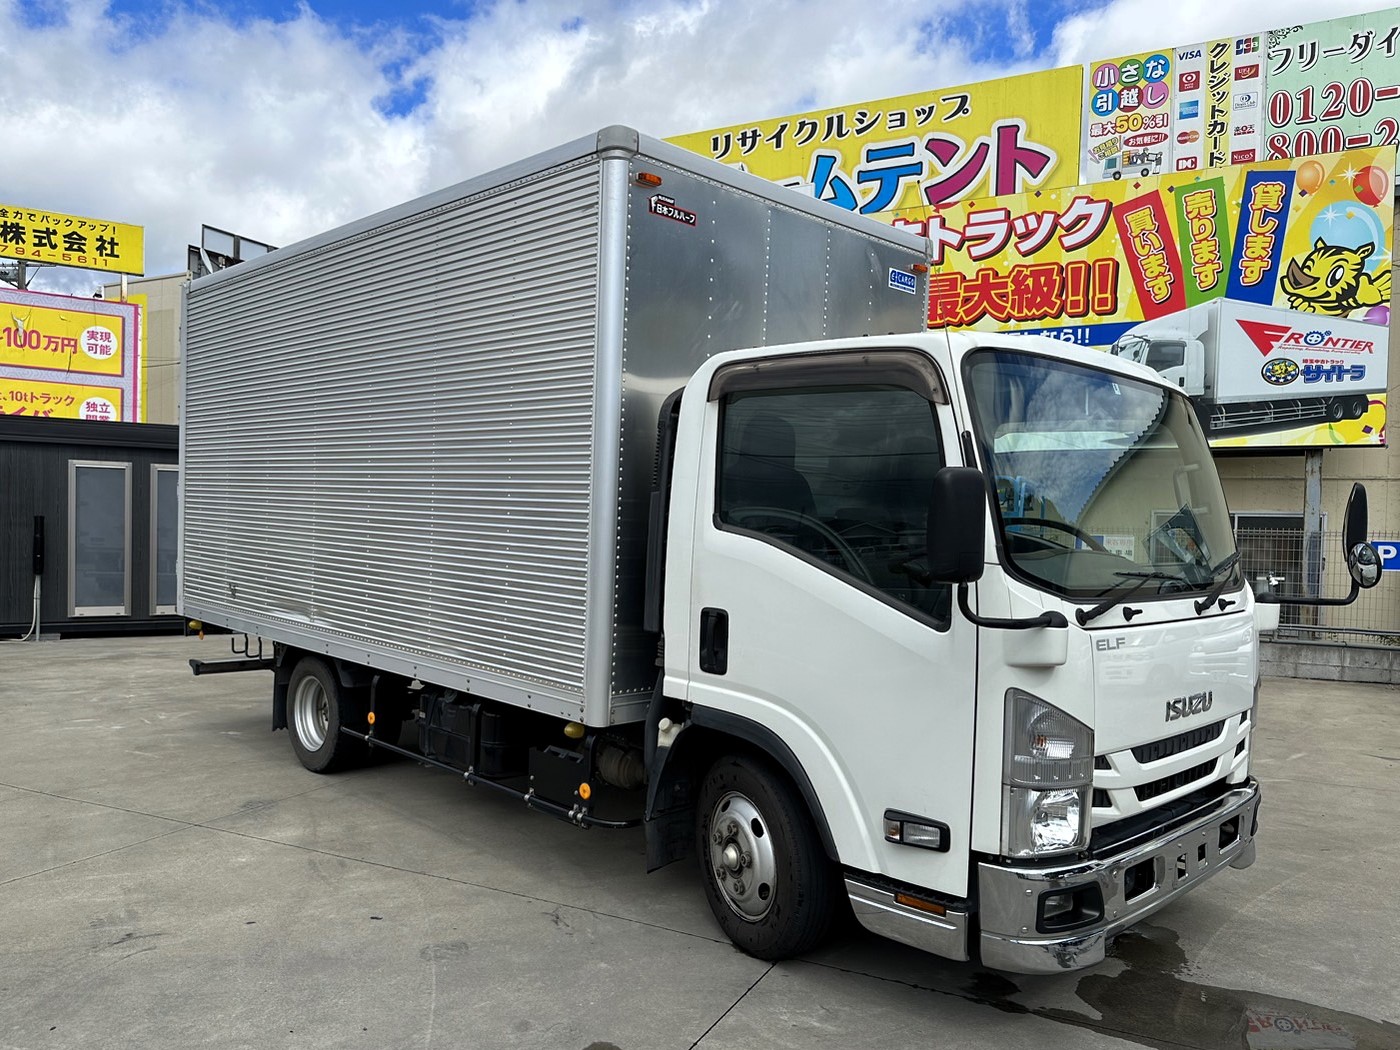 search results｜Used truck｜サイトラ株式会社｜埼玉県中古トラック